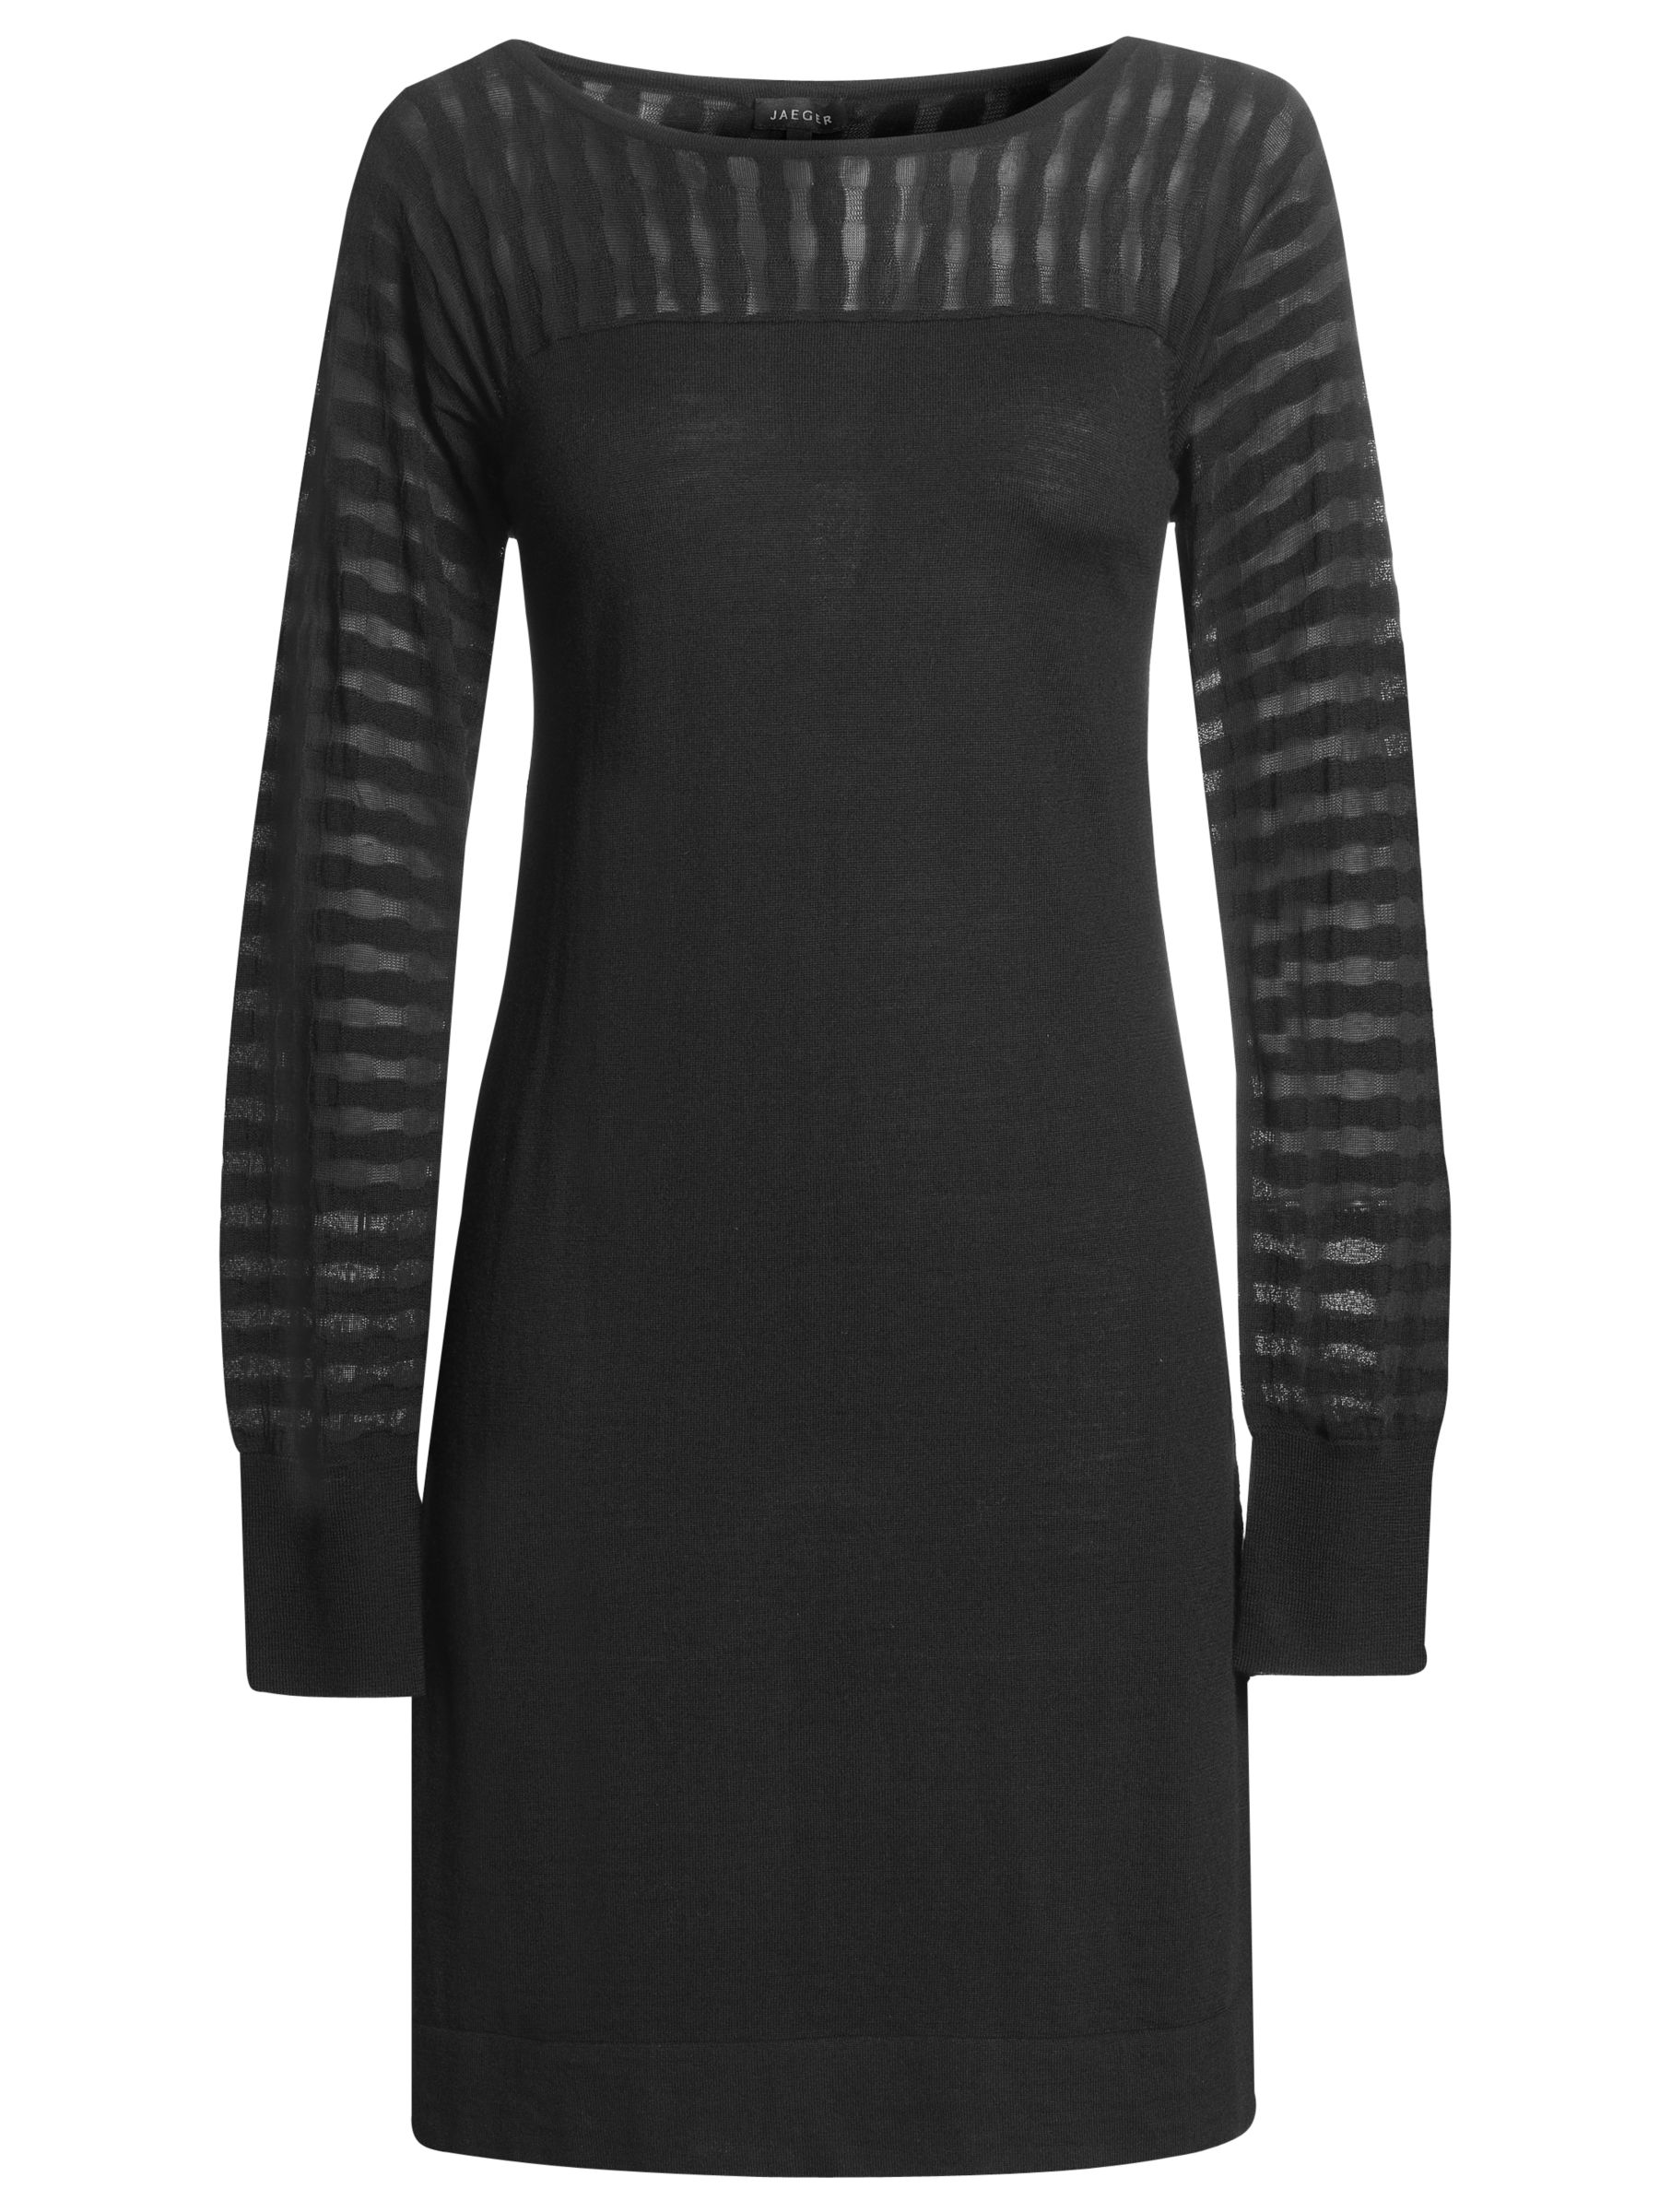 Jaeger Wave Knitted Dress, Black at John Lewis